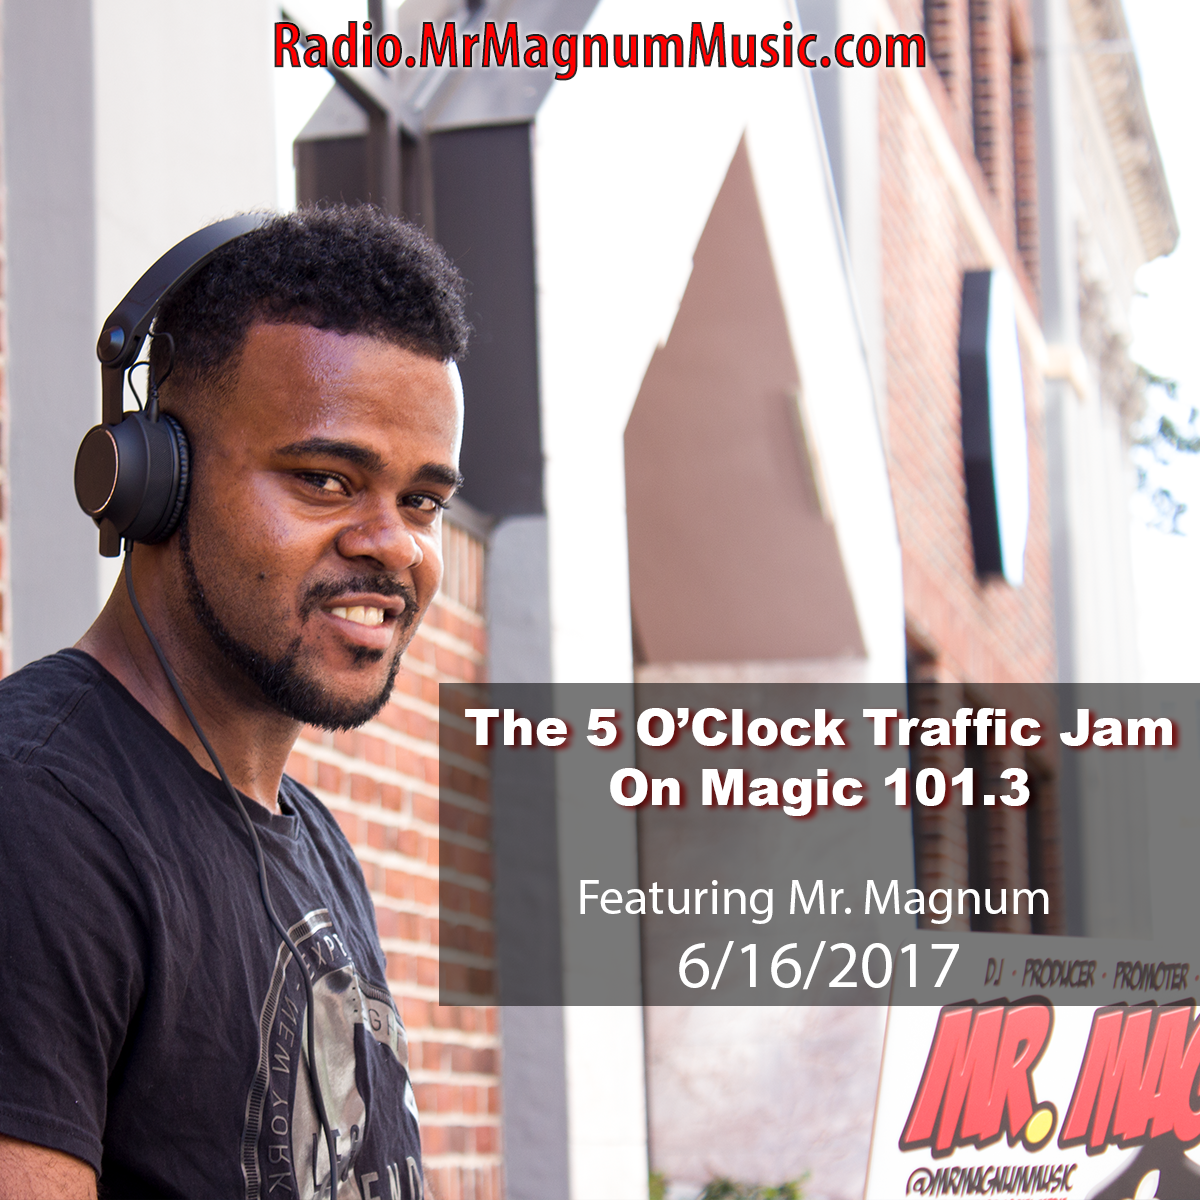 The 5 O'Clock Traffic Jam 20170616 featuring Gainesville's #1 DJ, Mr. Magnum on Magic 101.3